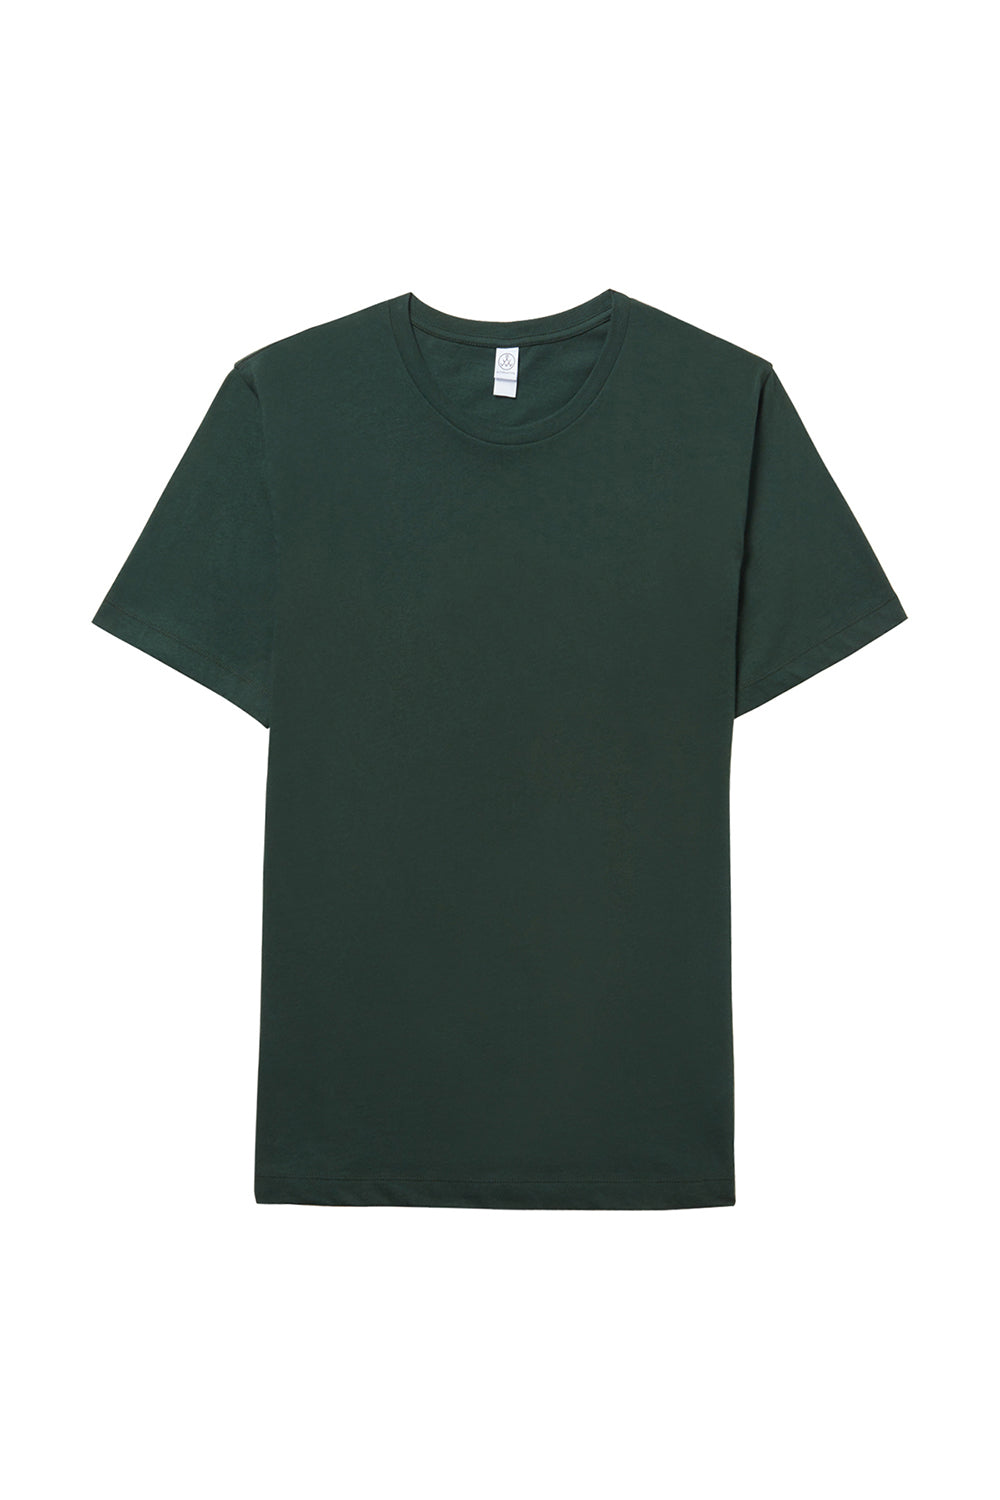 Alternative AA1070/1070 Mens Go To Jersey Short Sleeve Crewneck T-Shirt Varsity Green Flat Front